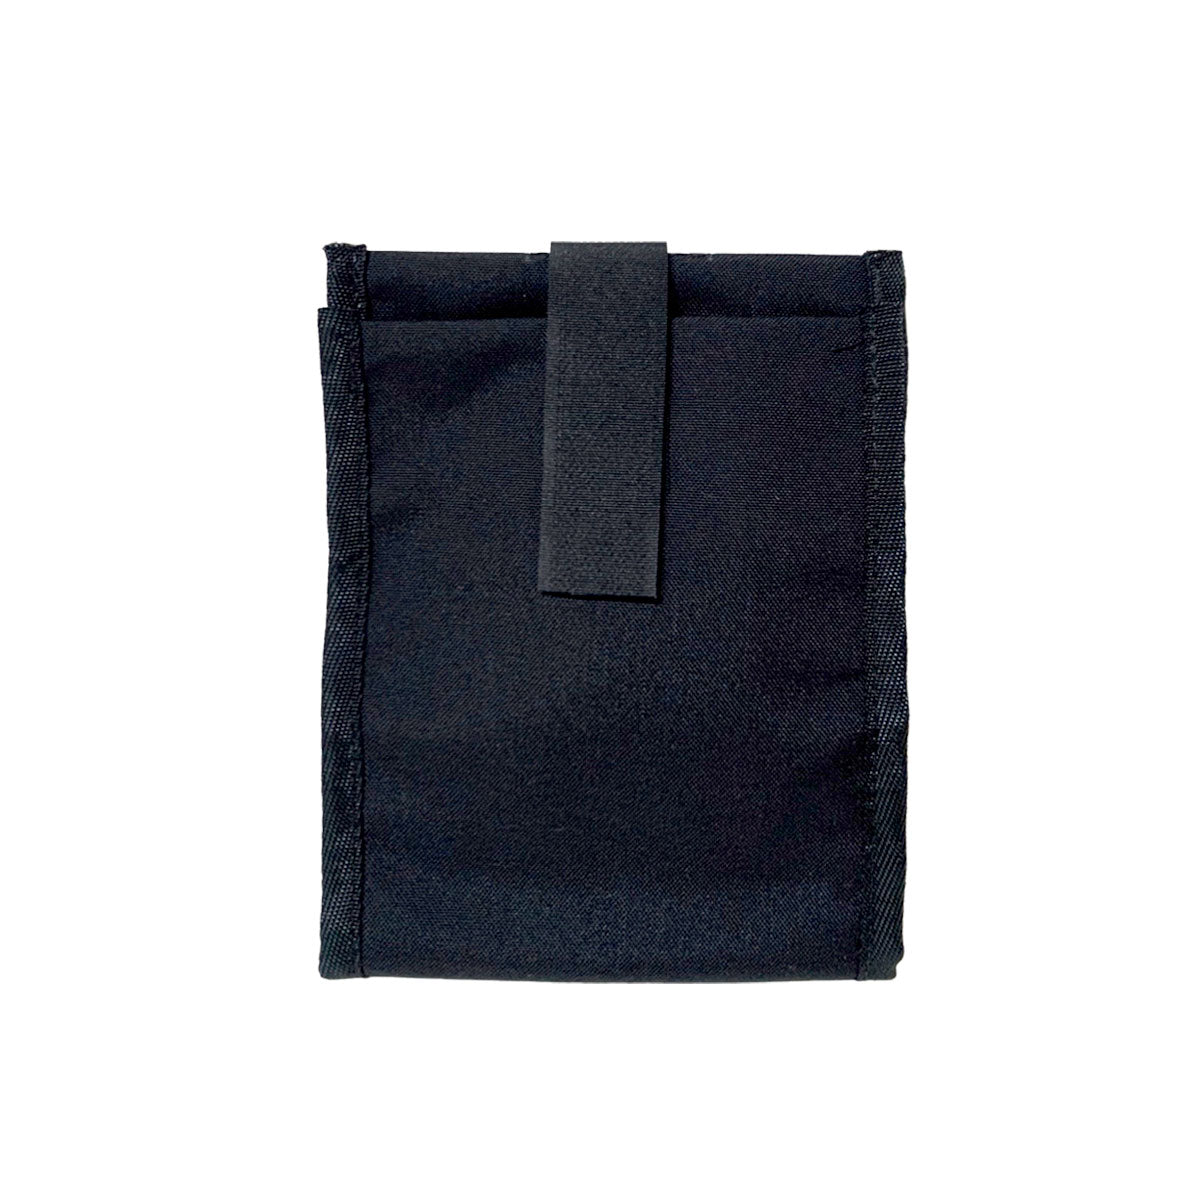 Combat Clothing Trifold Wallet Black Accessories Combat Clothing Australia Tactical Gear Supplier Tactical Distributors Australia